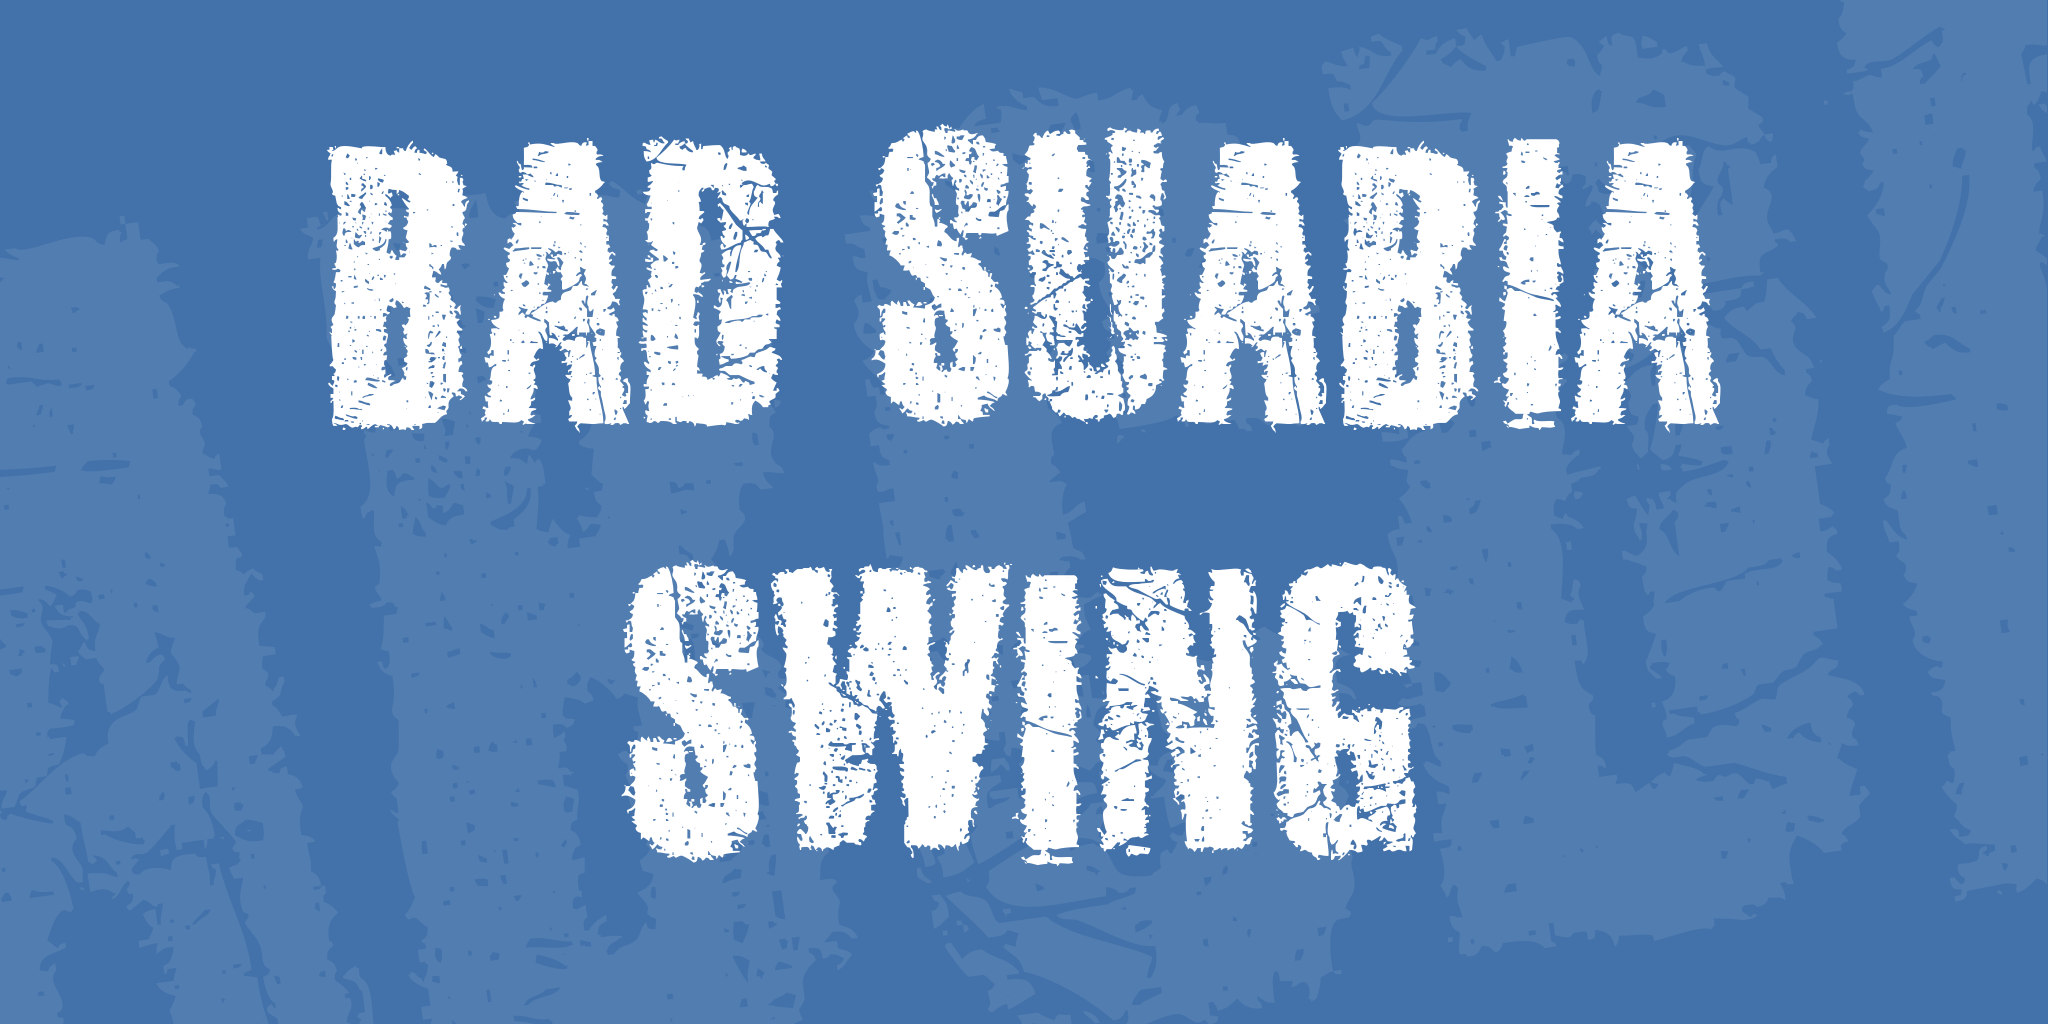 Bad Suabia Swing